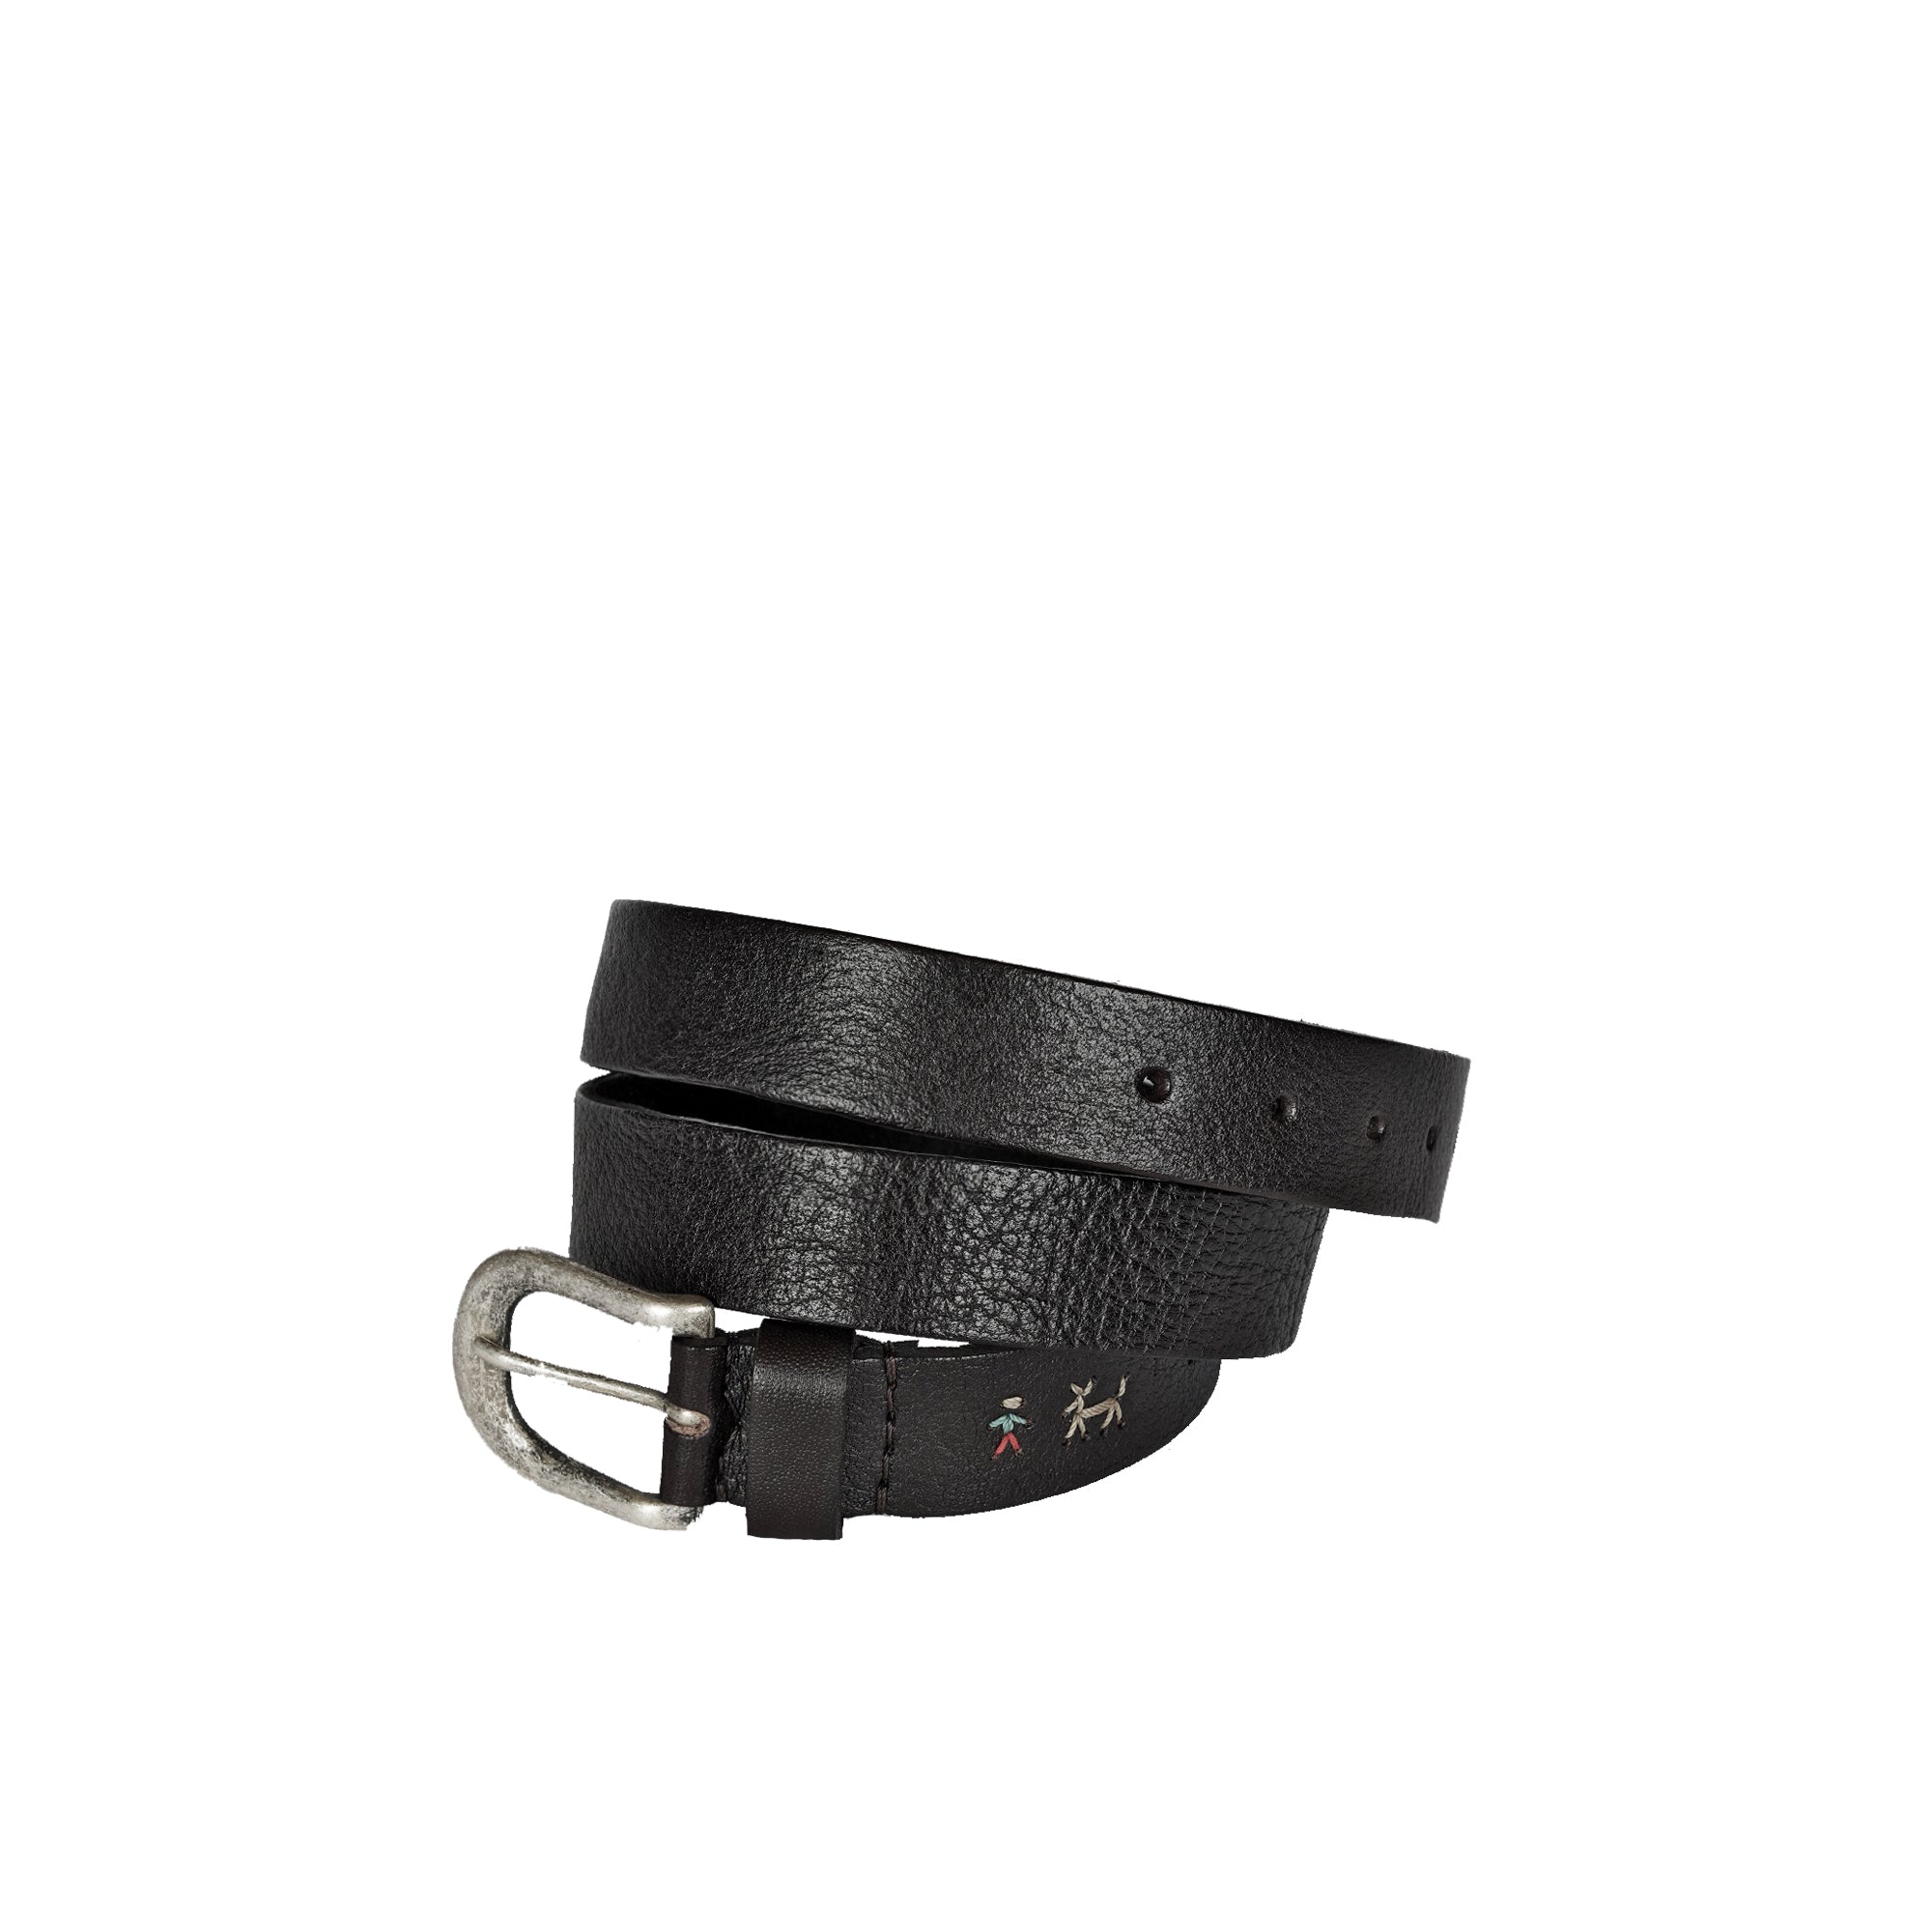 Lv belt Black / Silver Buckle - Size 80 Cm / 26-28 for Sale in Santa